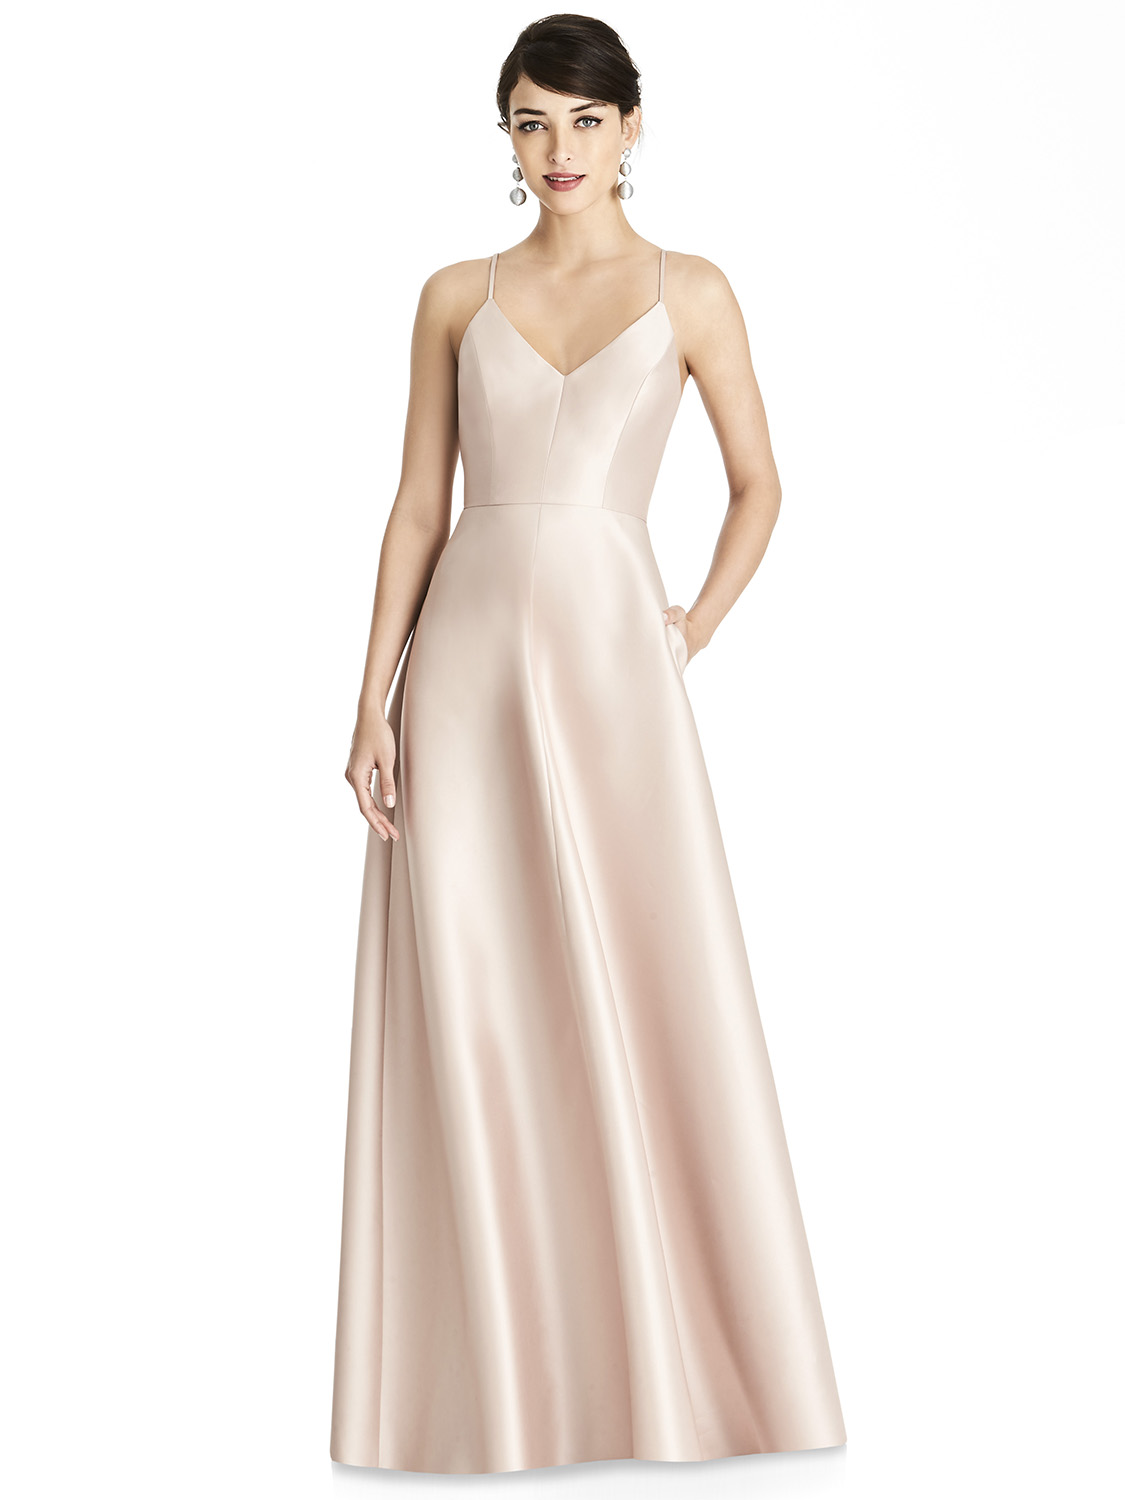 MOB Dress - Alfred Sung Bridesmaids SPRING 2018 - D750 - Fabric: Sateen ...